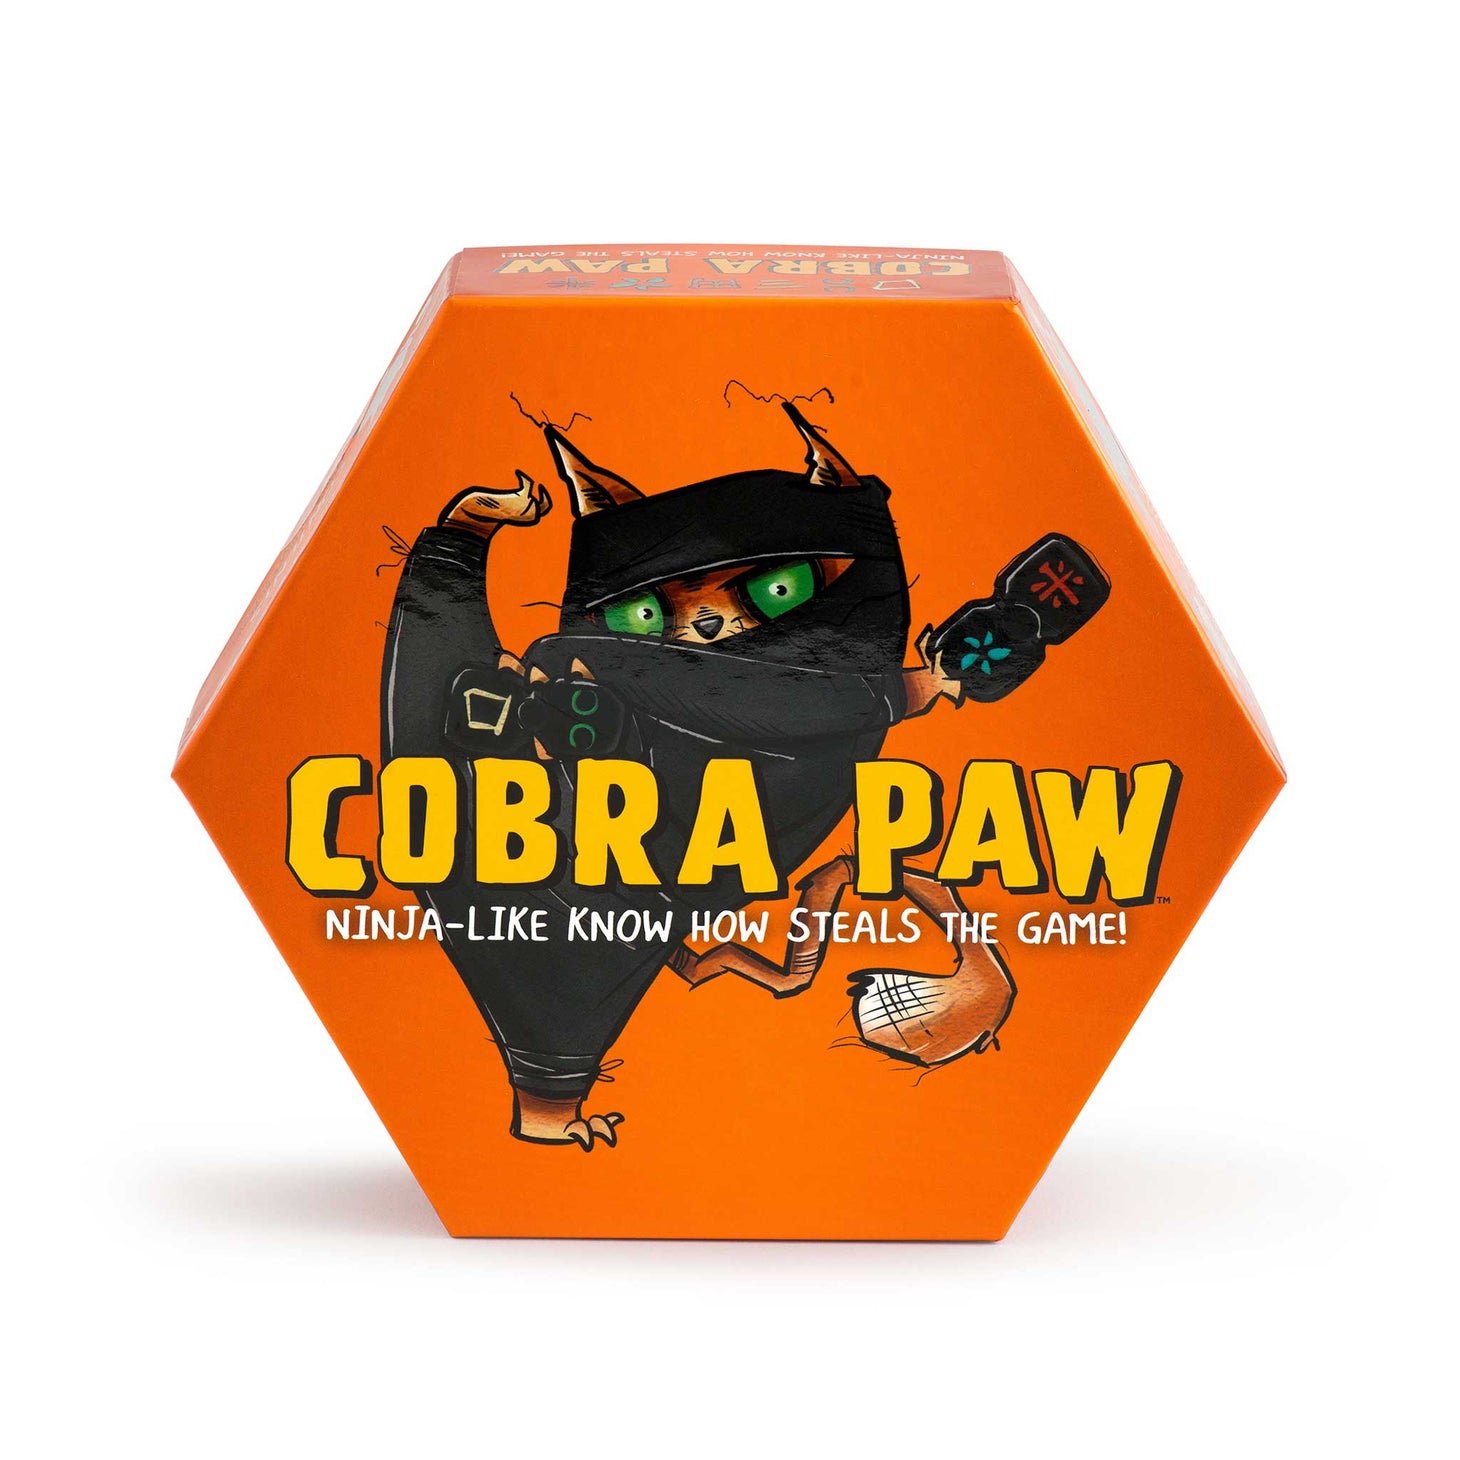 Cobra Paw box